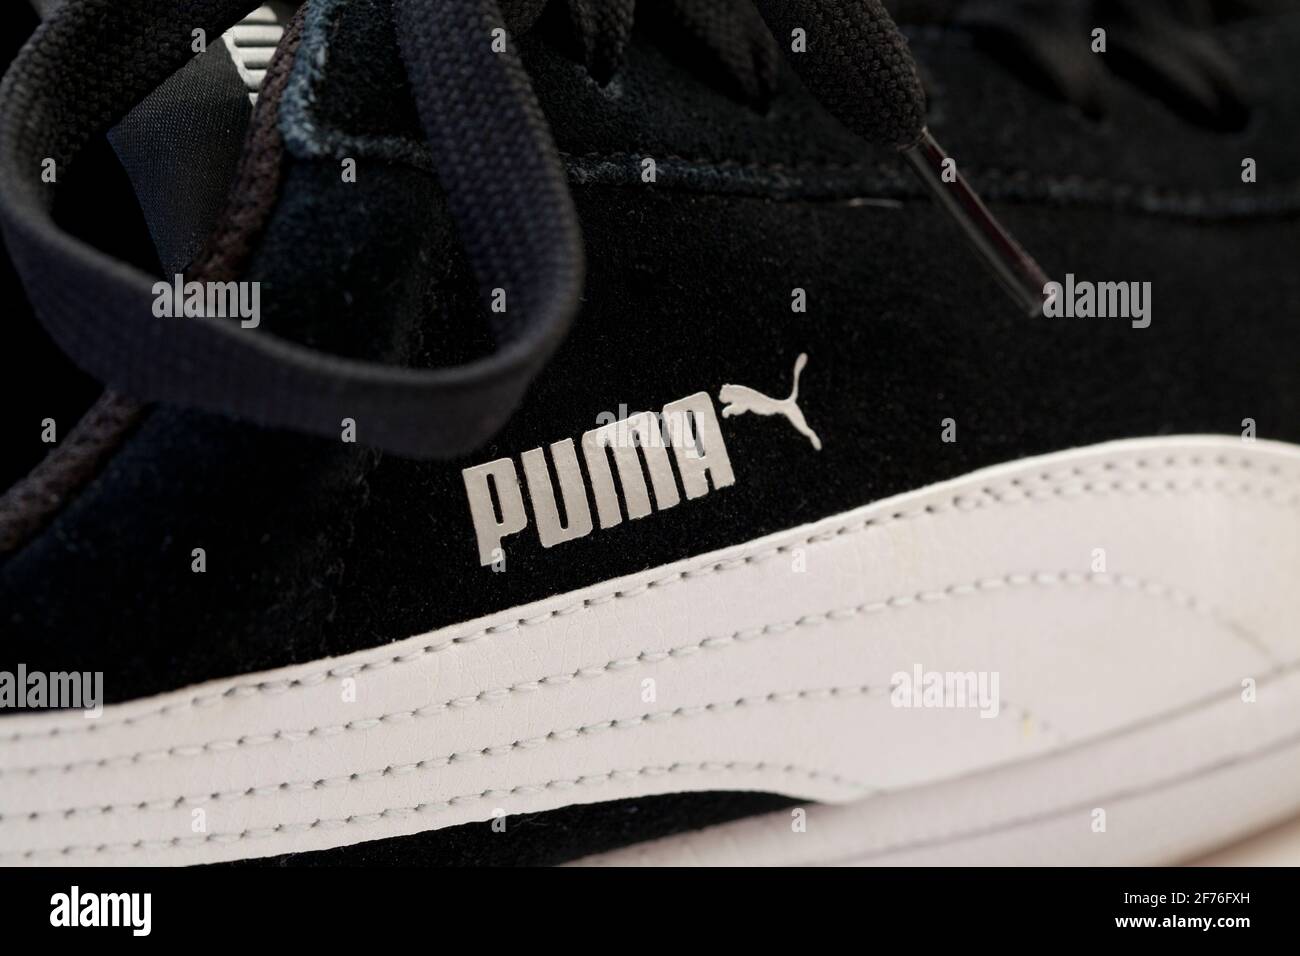 PUMA logo on sneakers - USA Stock Photo